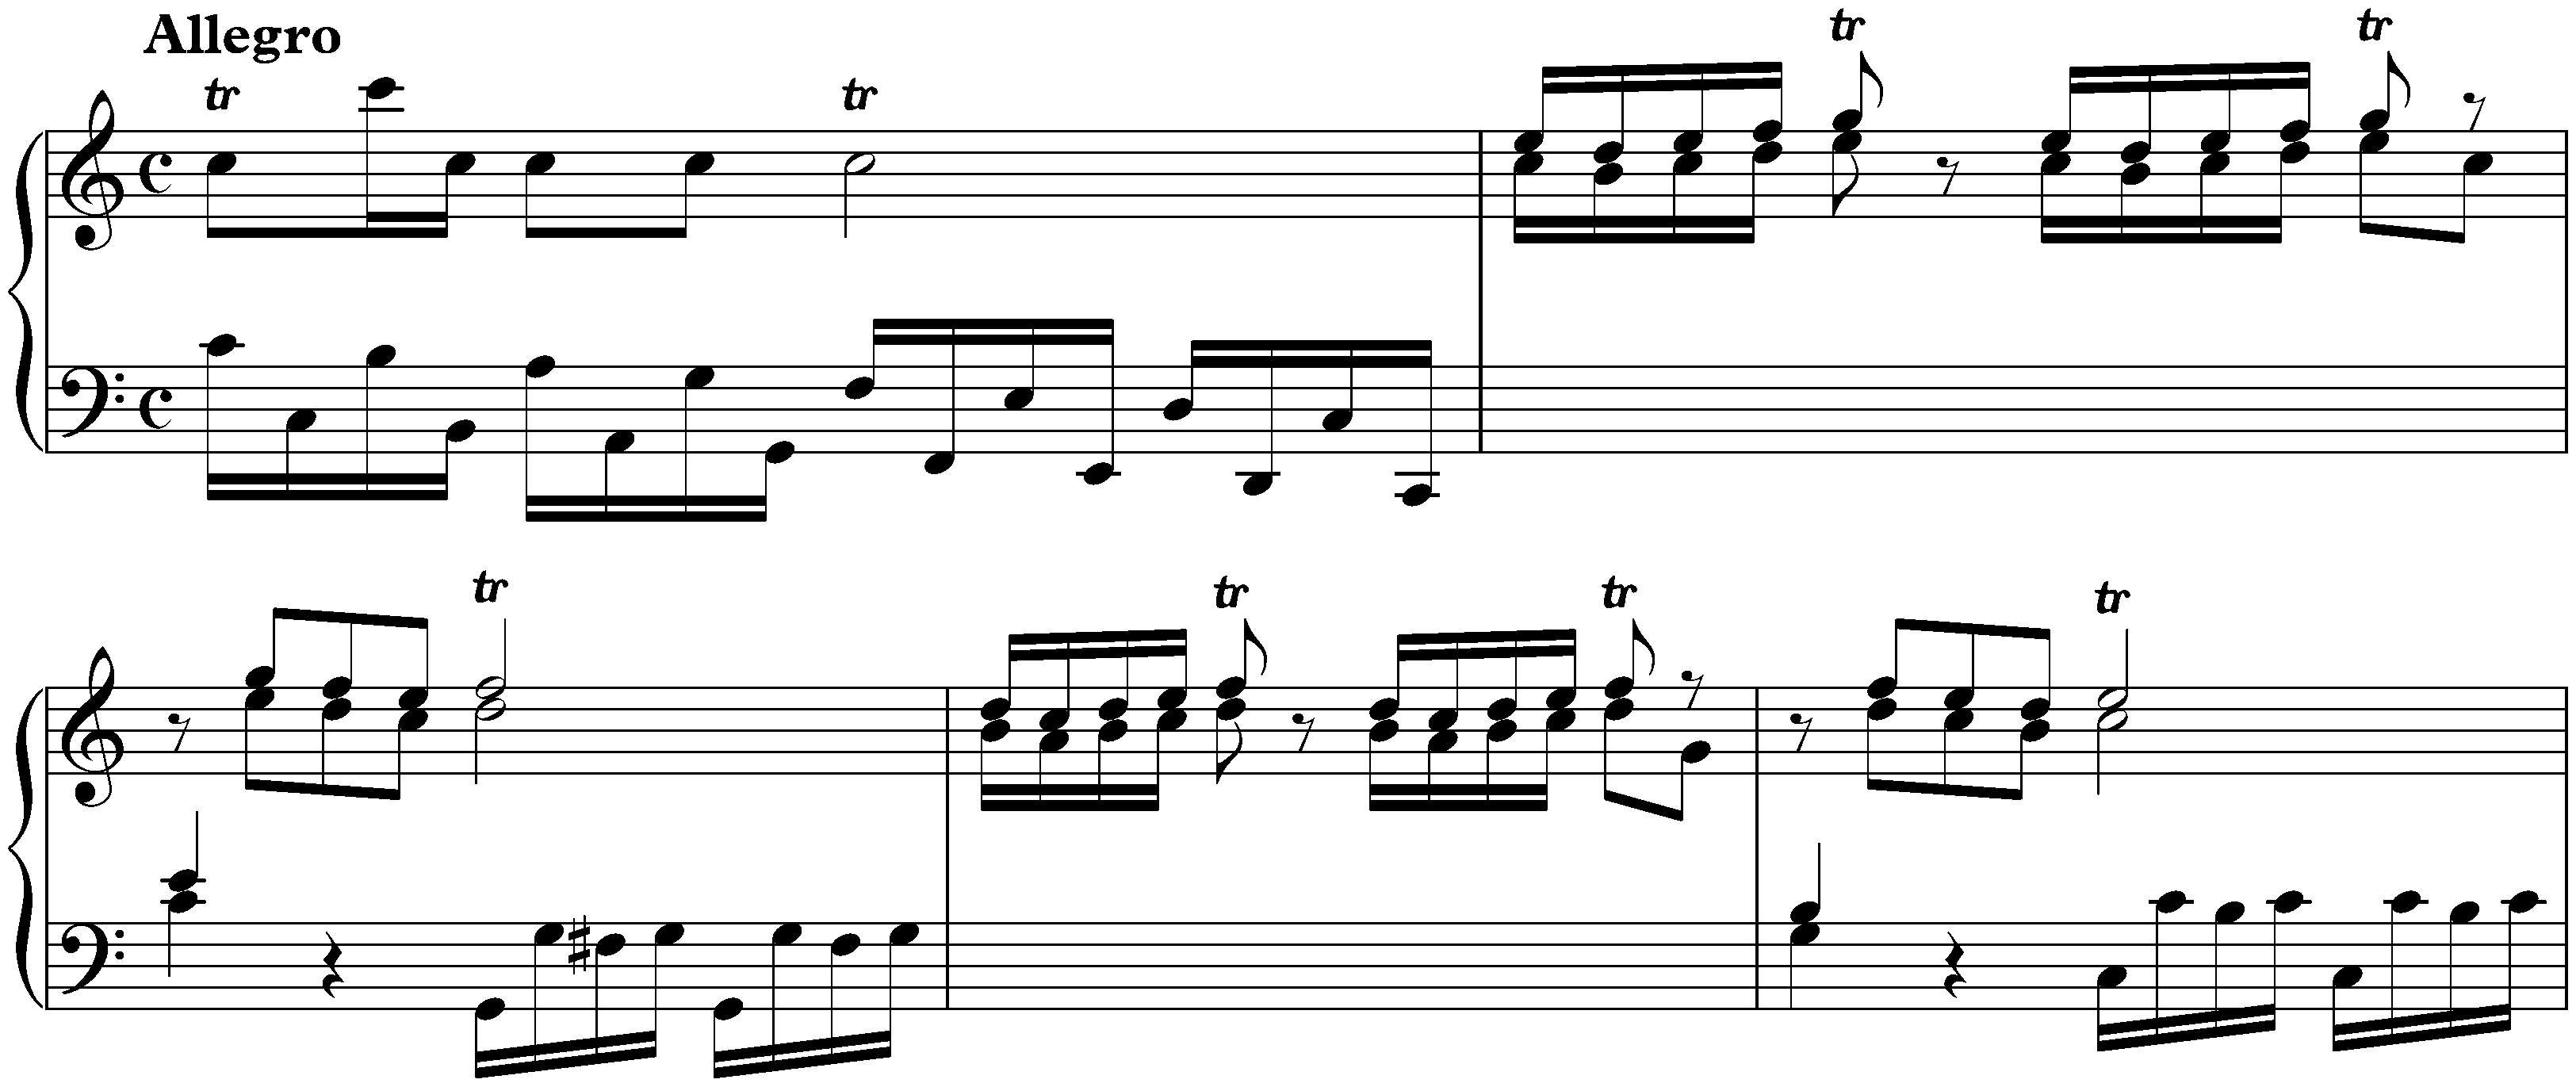 Sonatas published by Haffner; 1. C major